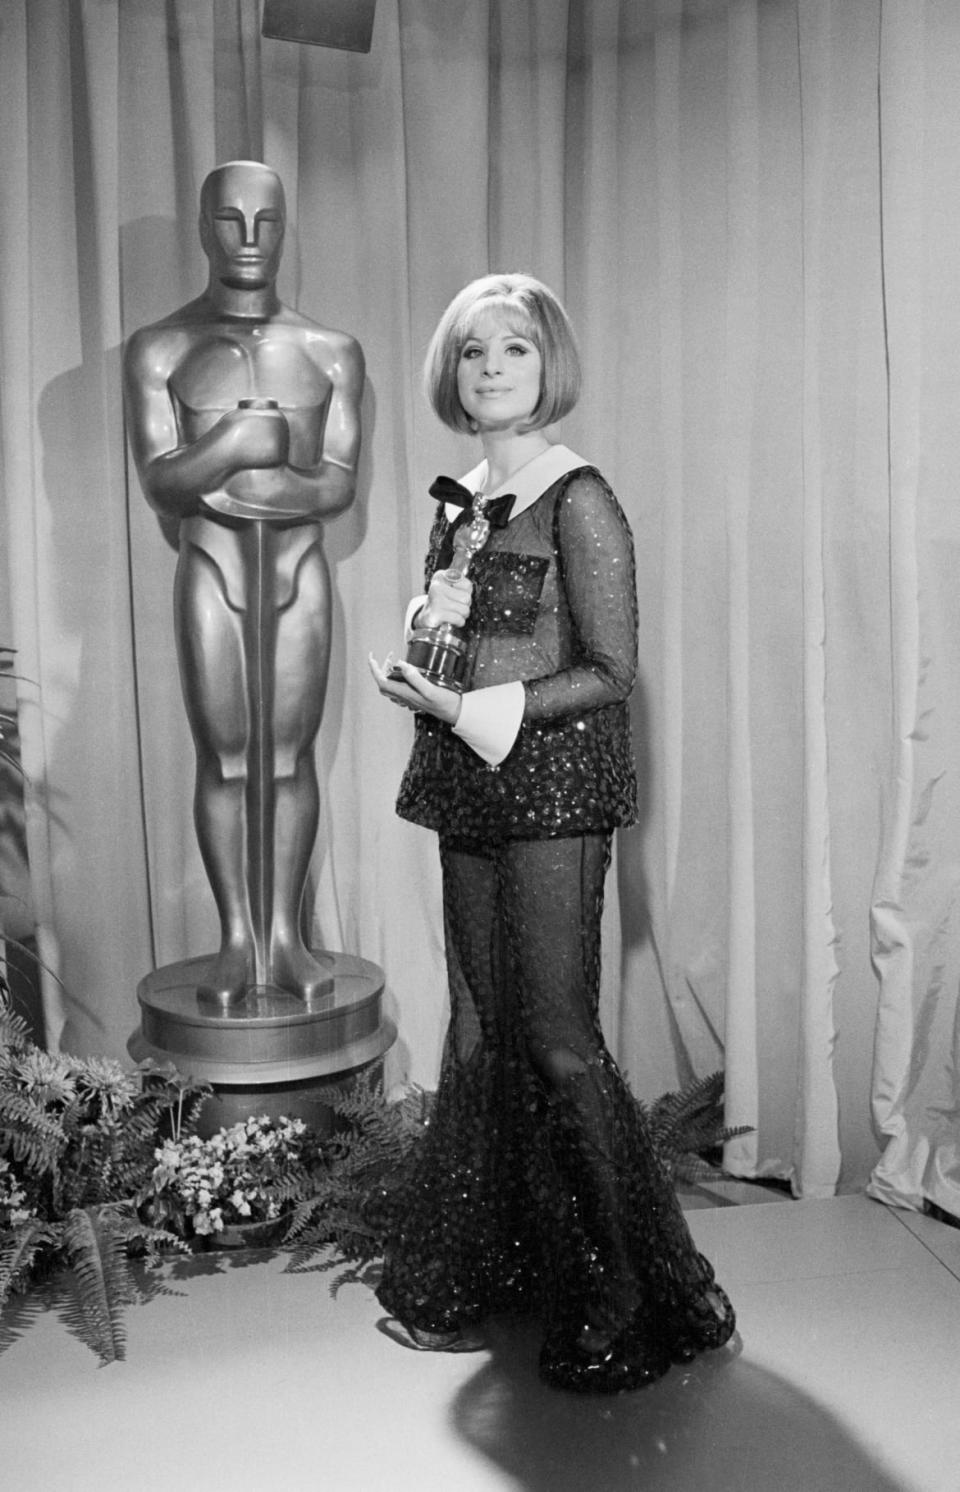 <div class="inline-image__caption"><p>Barbra Streisand at the 1969 Academy Awards</p></div> <div class="inline-image__credit">Bettmann/Getty</div>